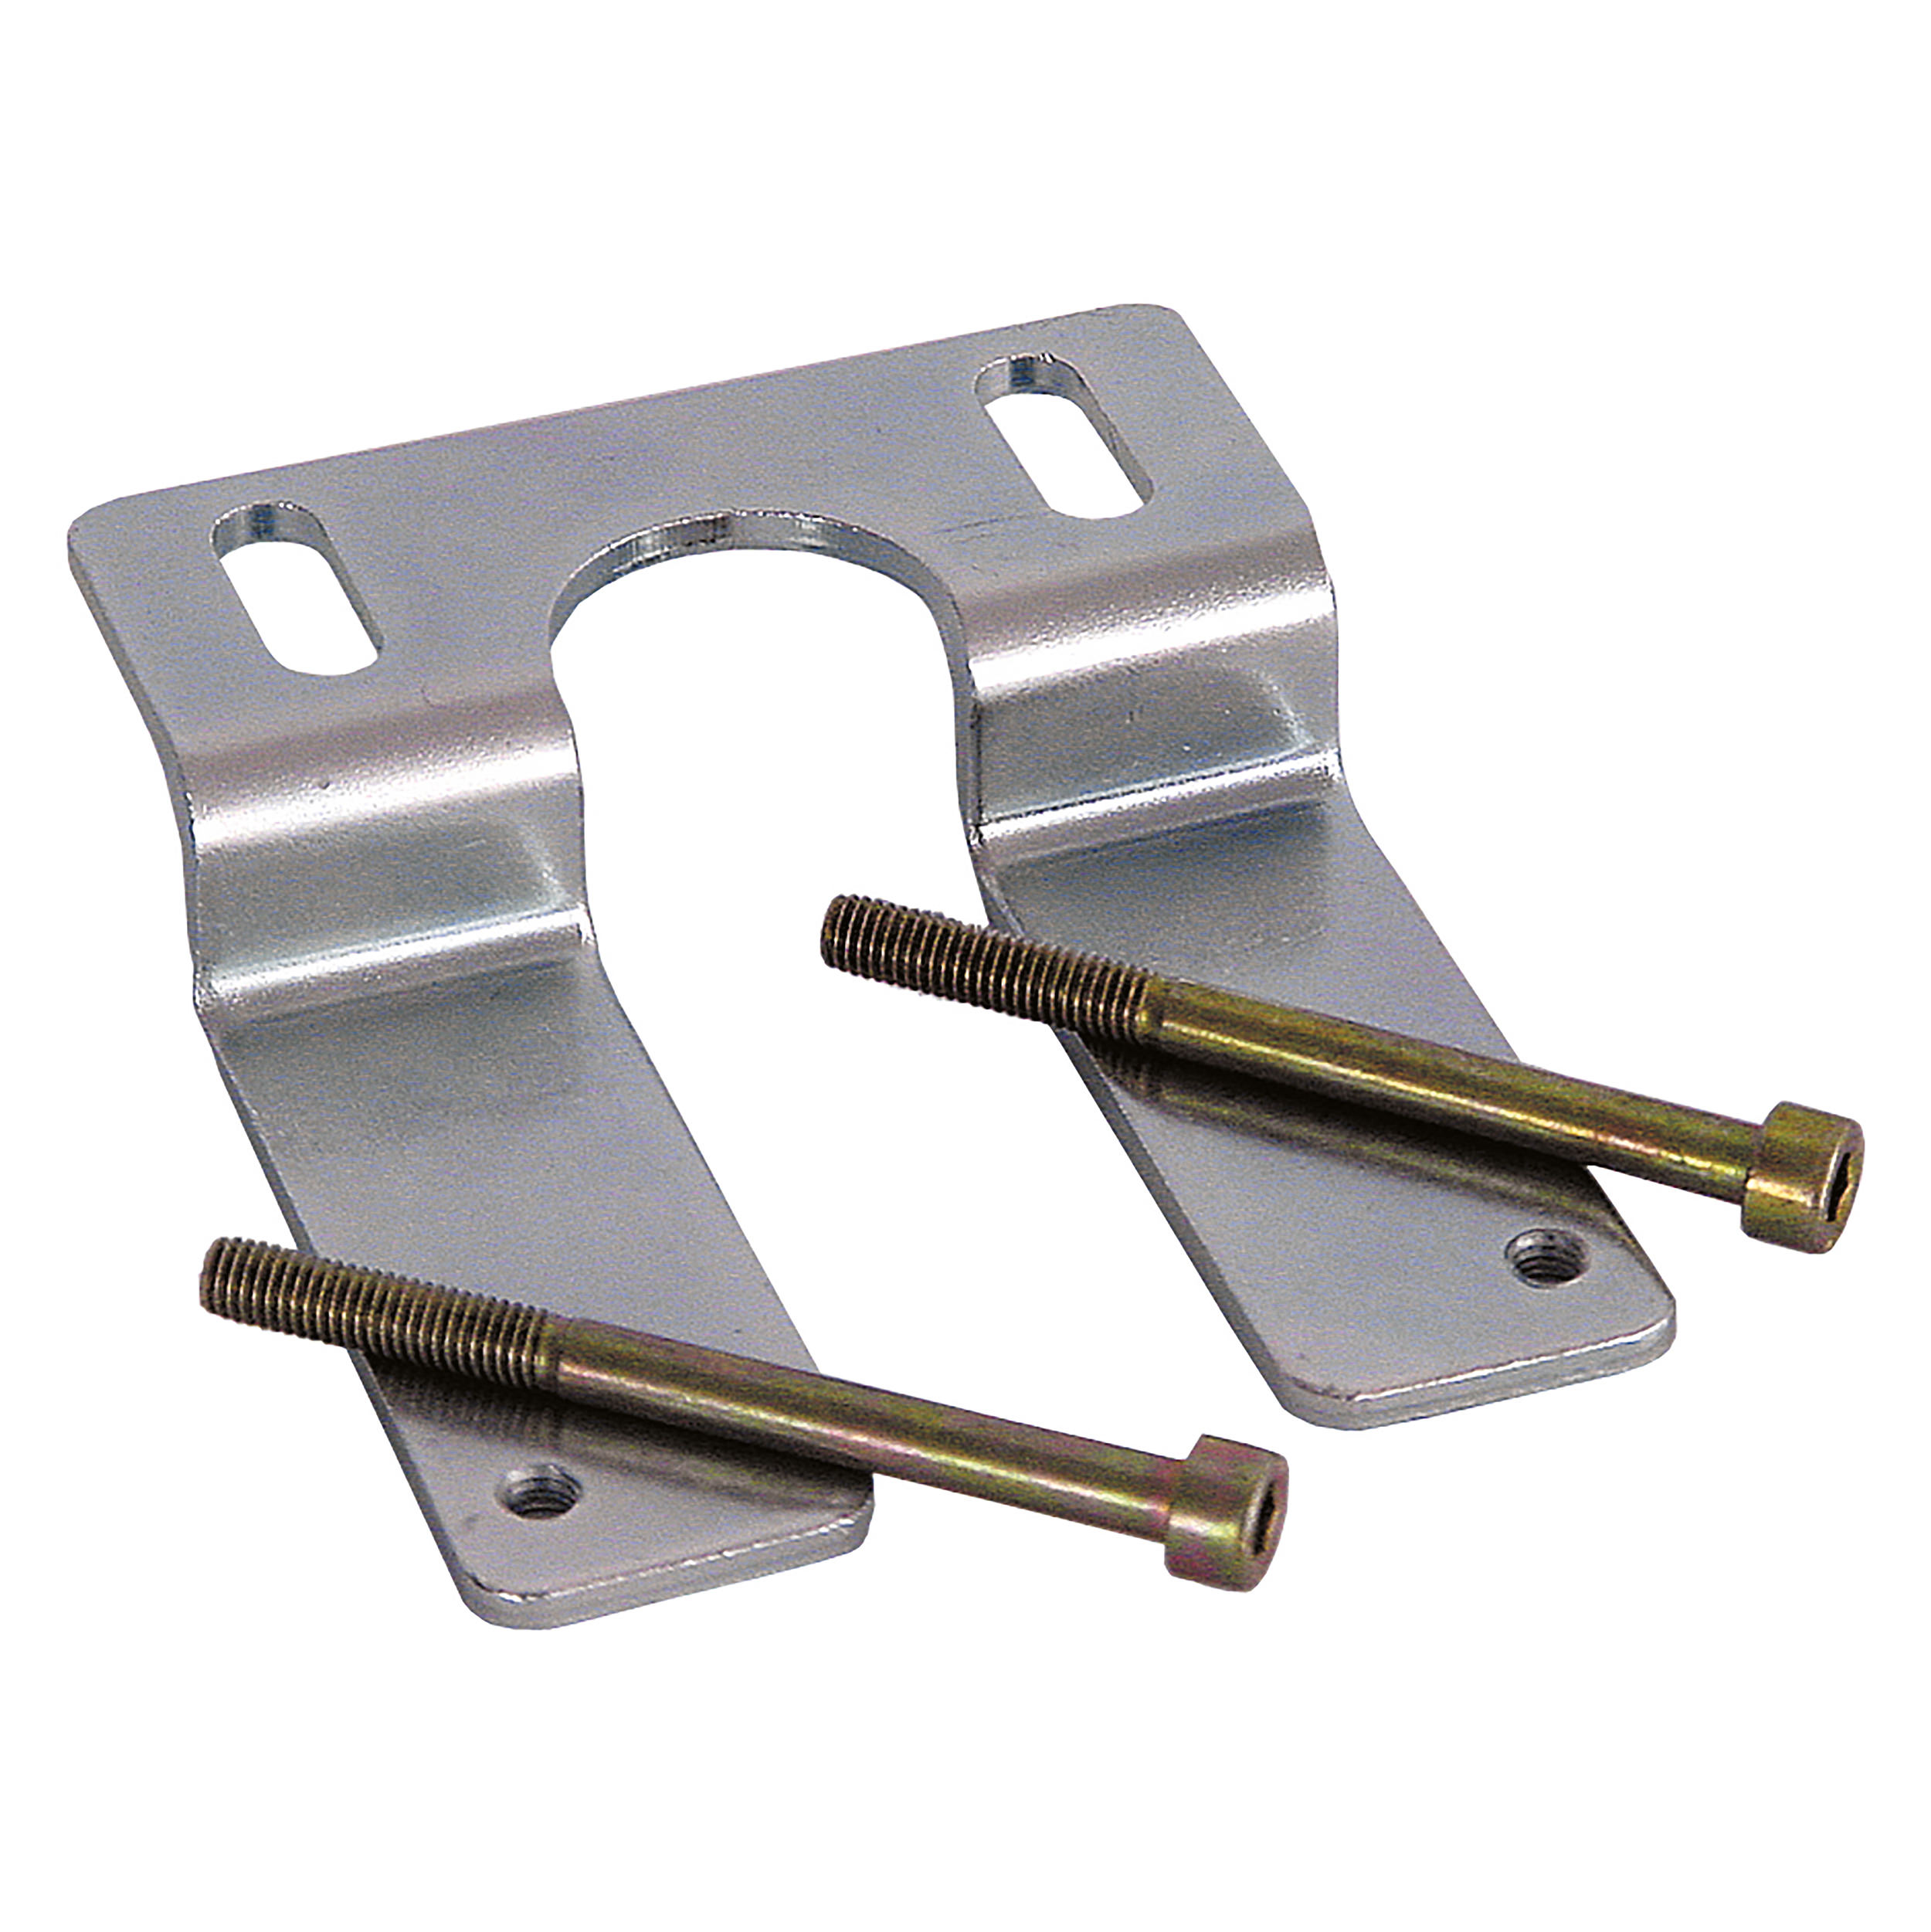 Bracket-set for mounting at the housing variobloc, suitable: BG 20, BG 30, content: bracket, 2 mounting screws